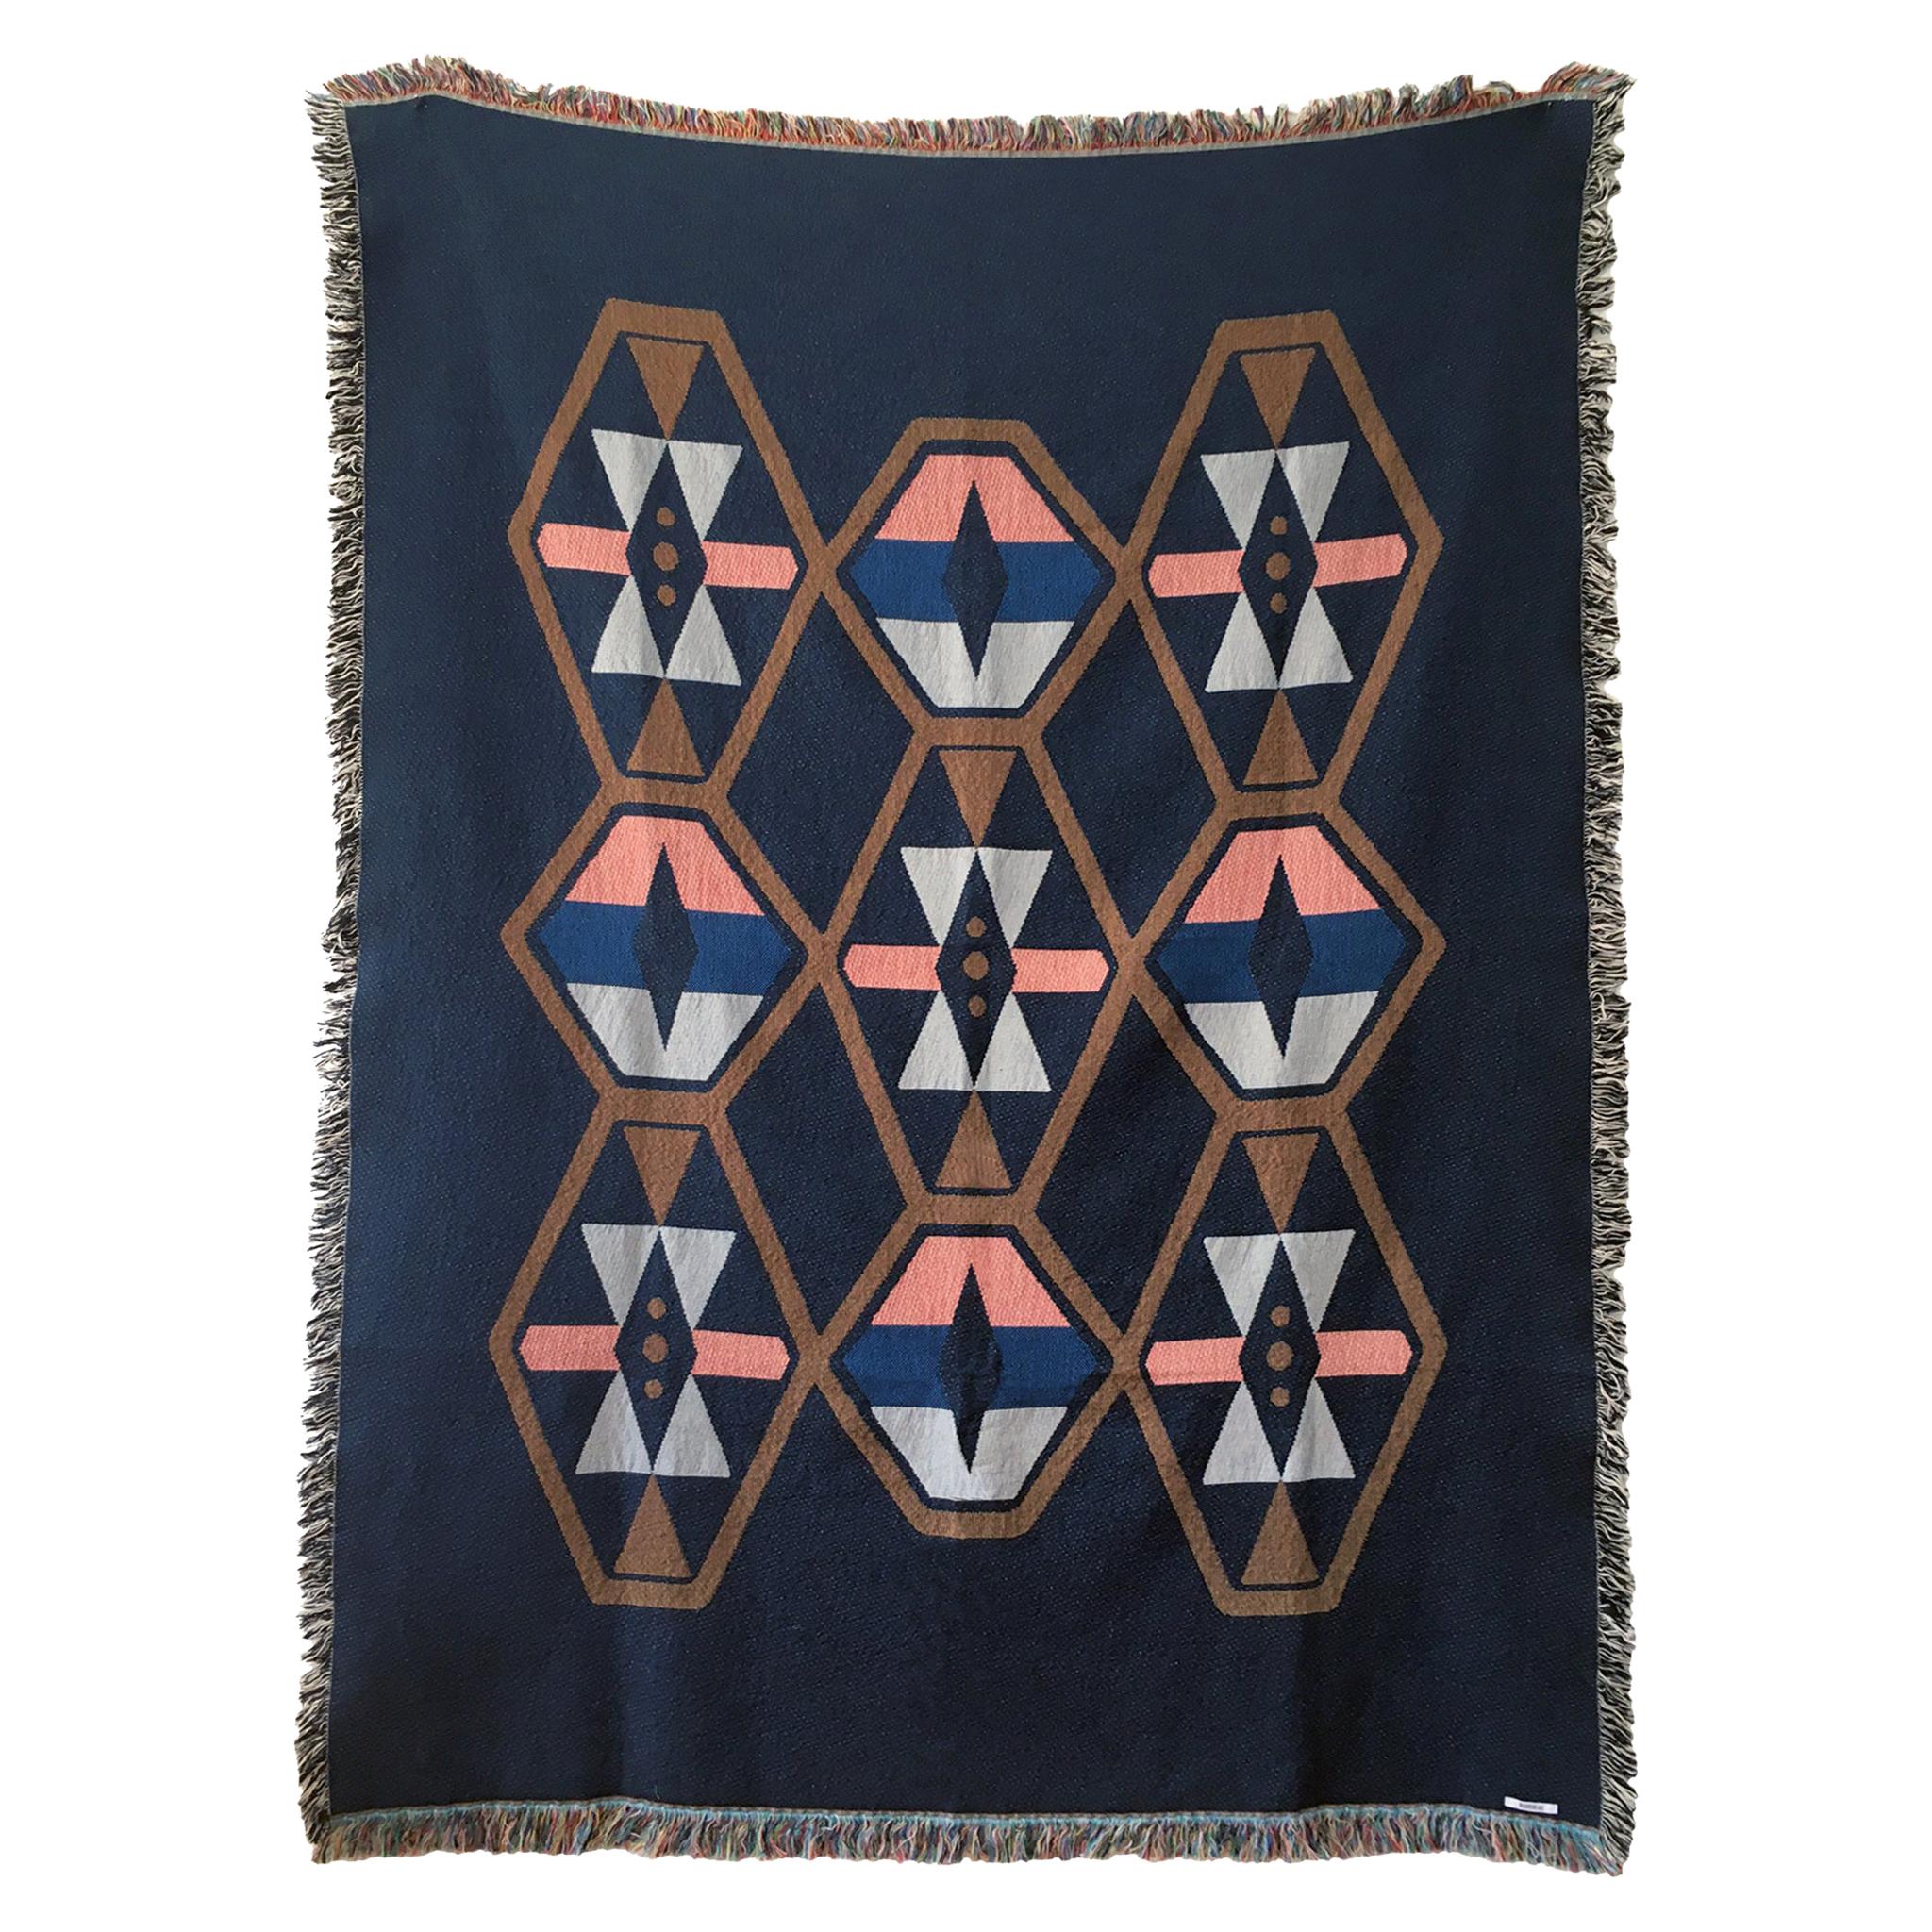 Woven Cotton Throw Blanket in Twilight Navy Blue Geometric Pattern